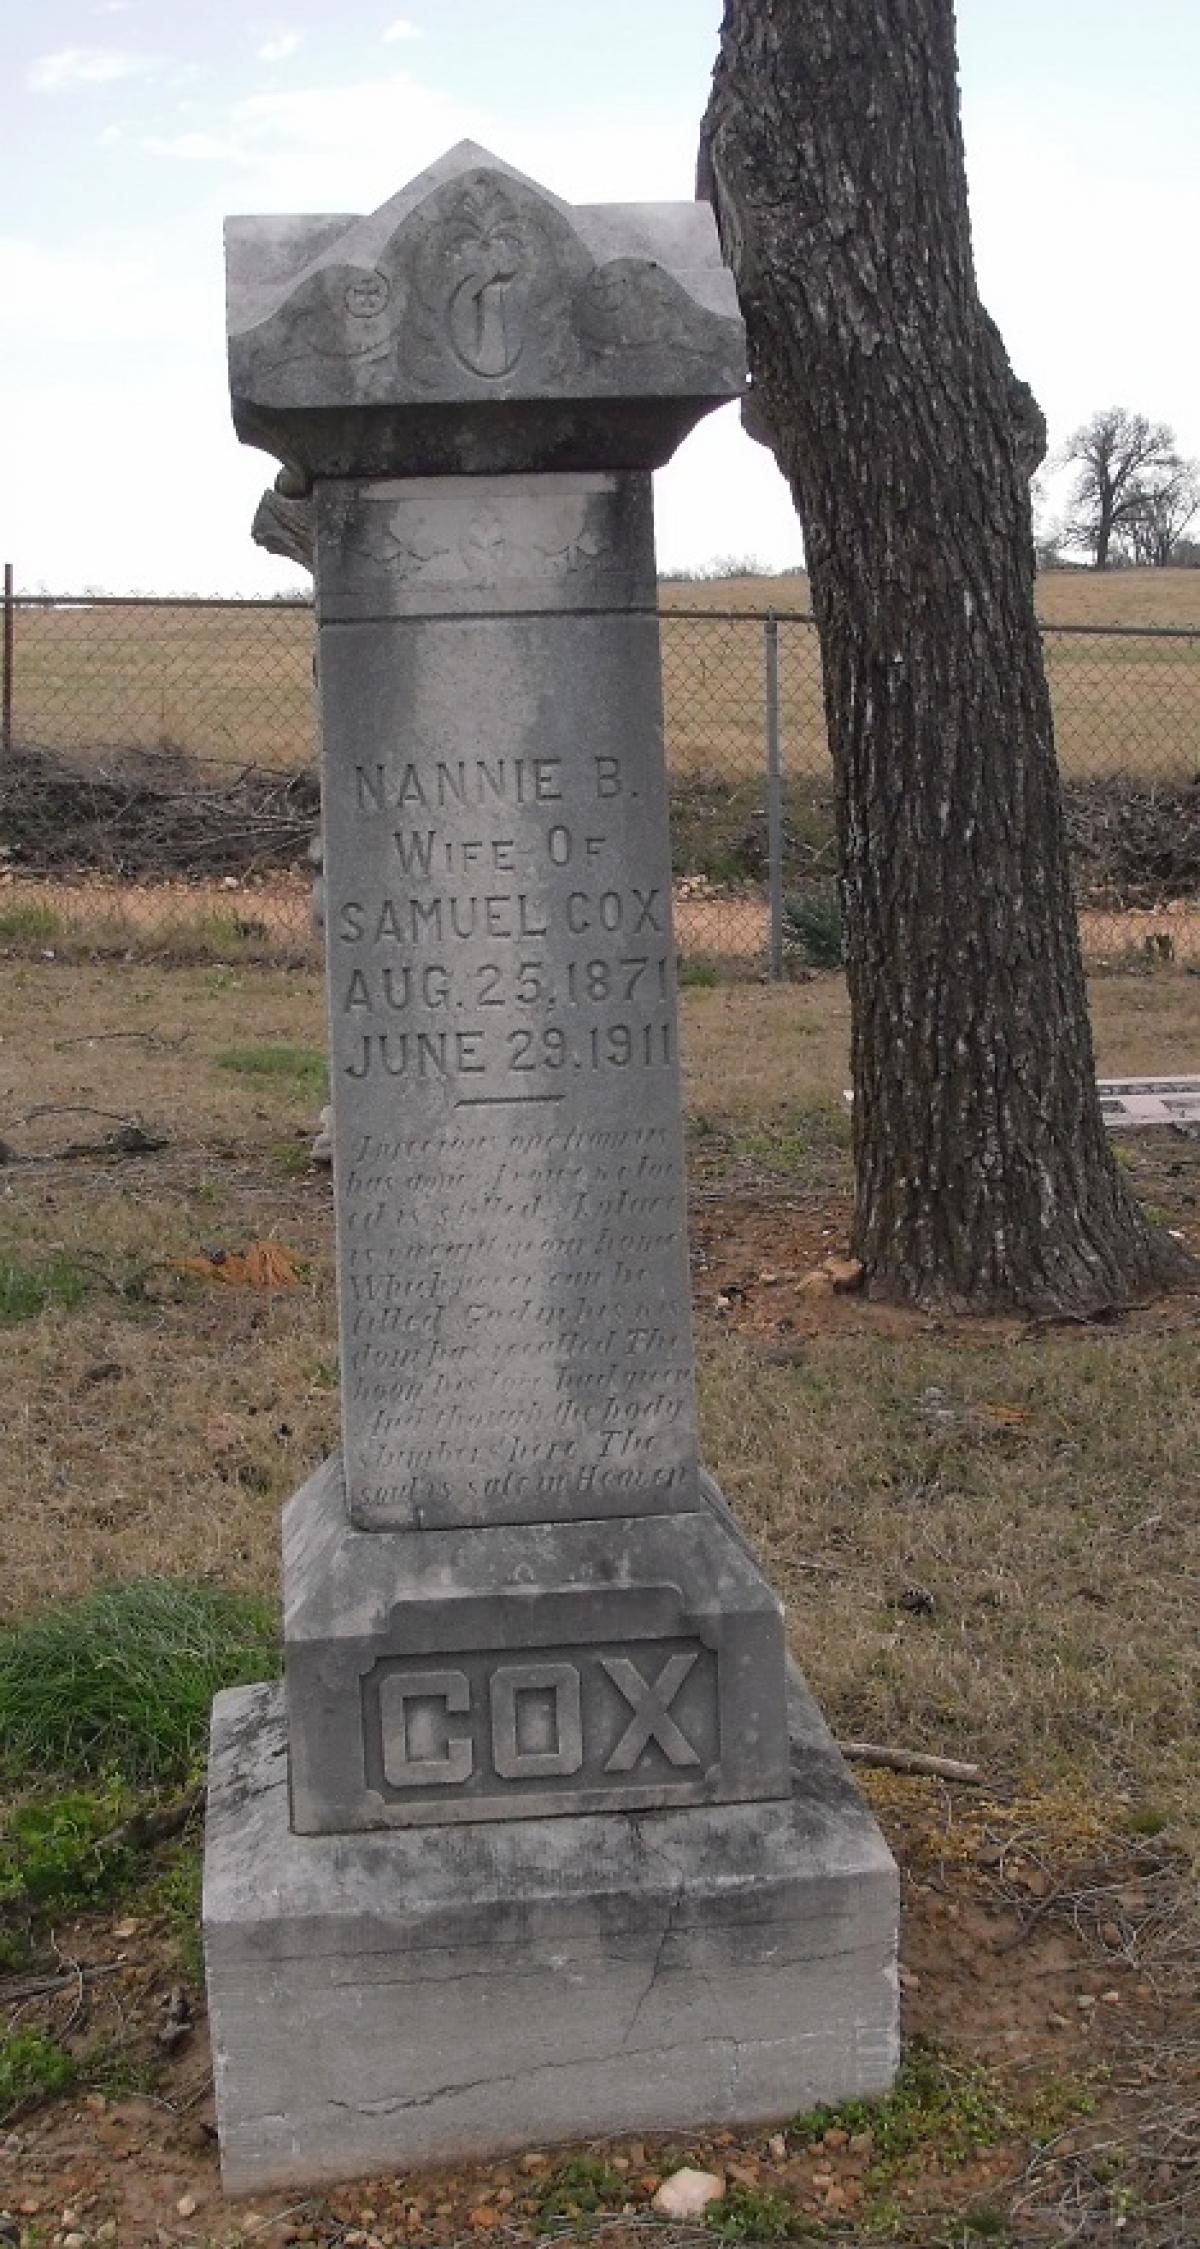 OK, Grove, Olympus Cemetery, Headstone, Cox, Nannie B. 